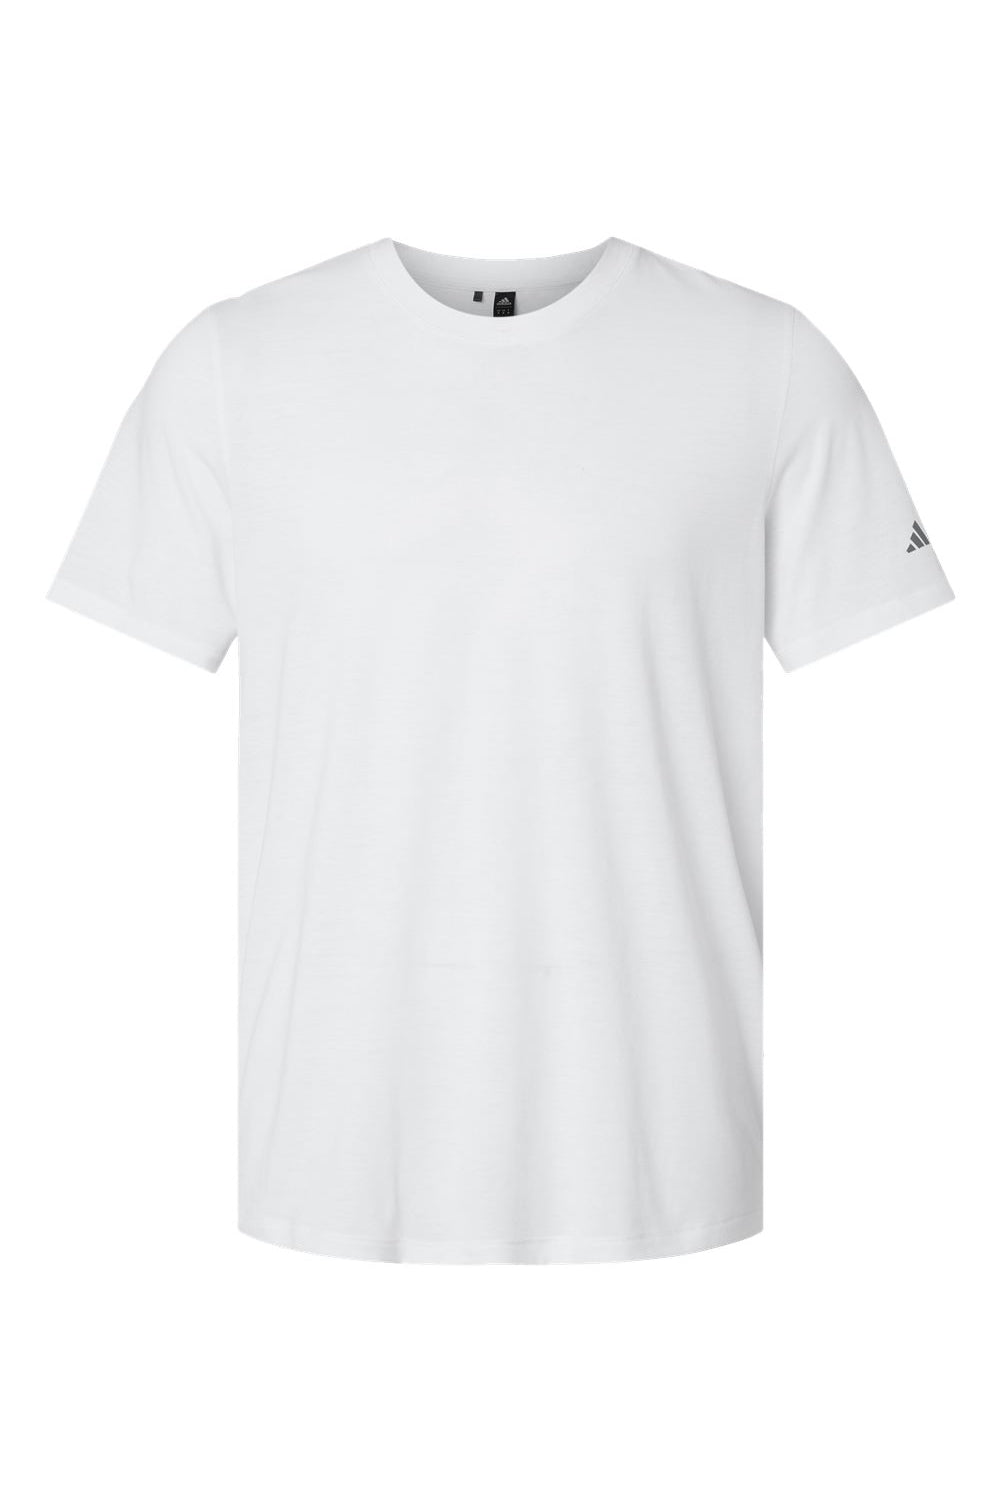 Adidas A556 Mens Short Sleeve Crewneck T-Shirt White Flat Front